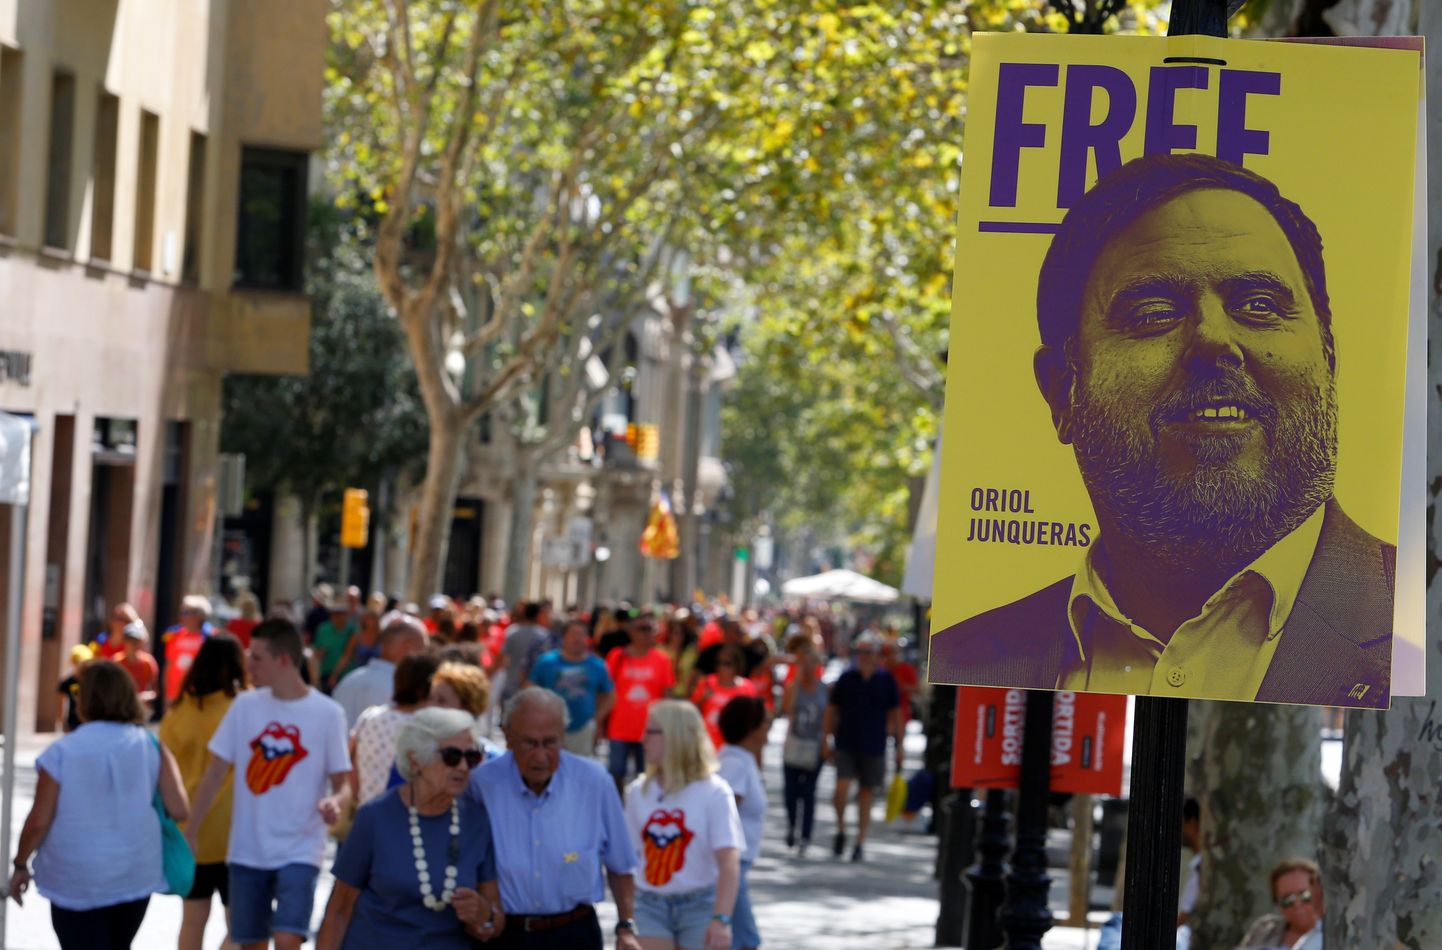 Kataloonia endise asepresidendi Oriol Junquerase vabastamist nõudev plakat Barcelonas.